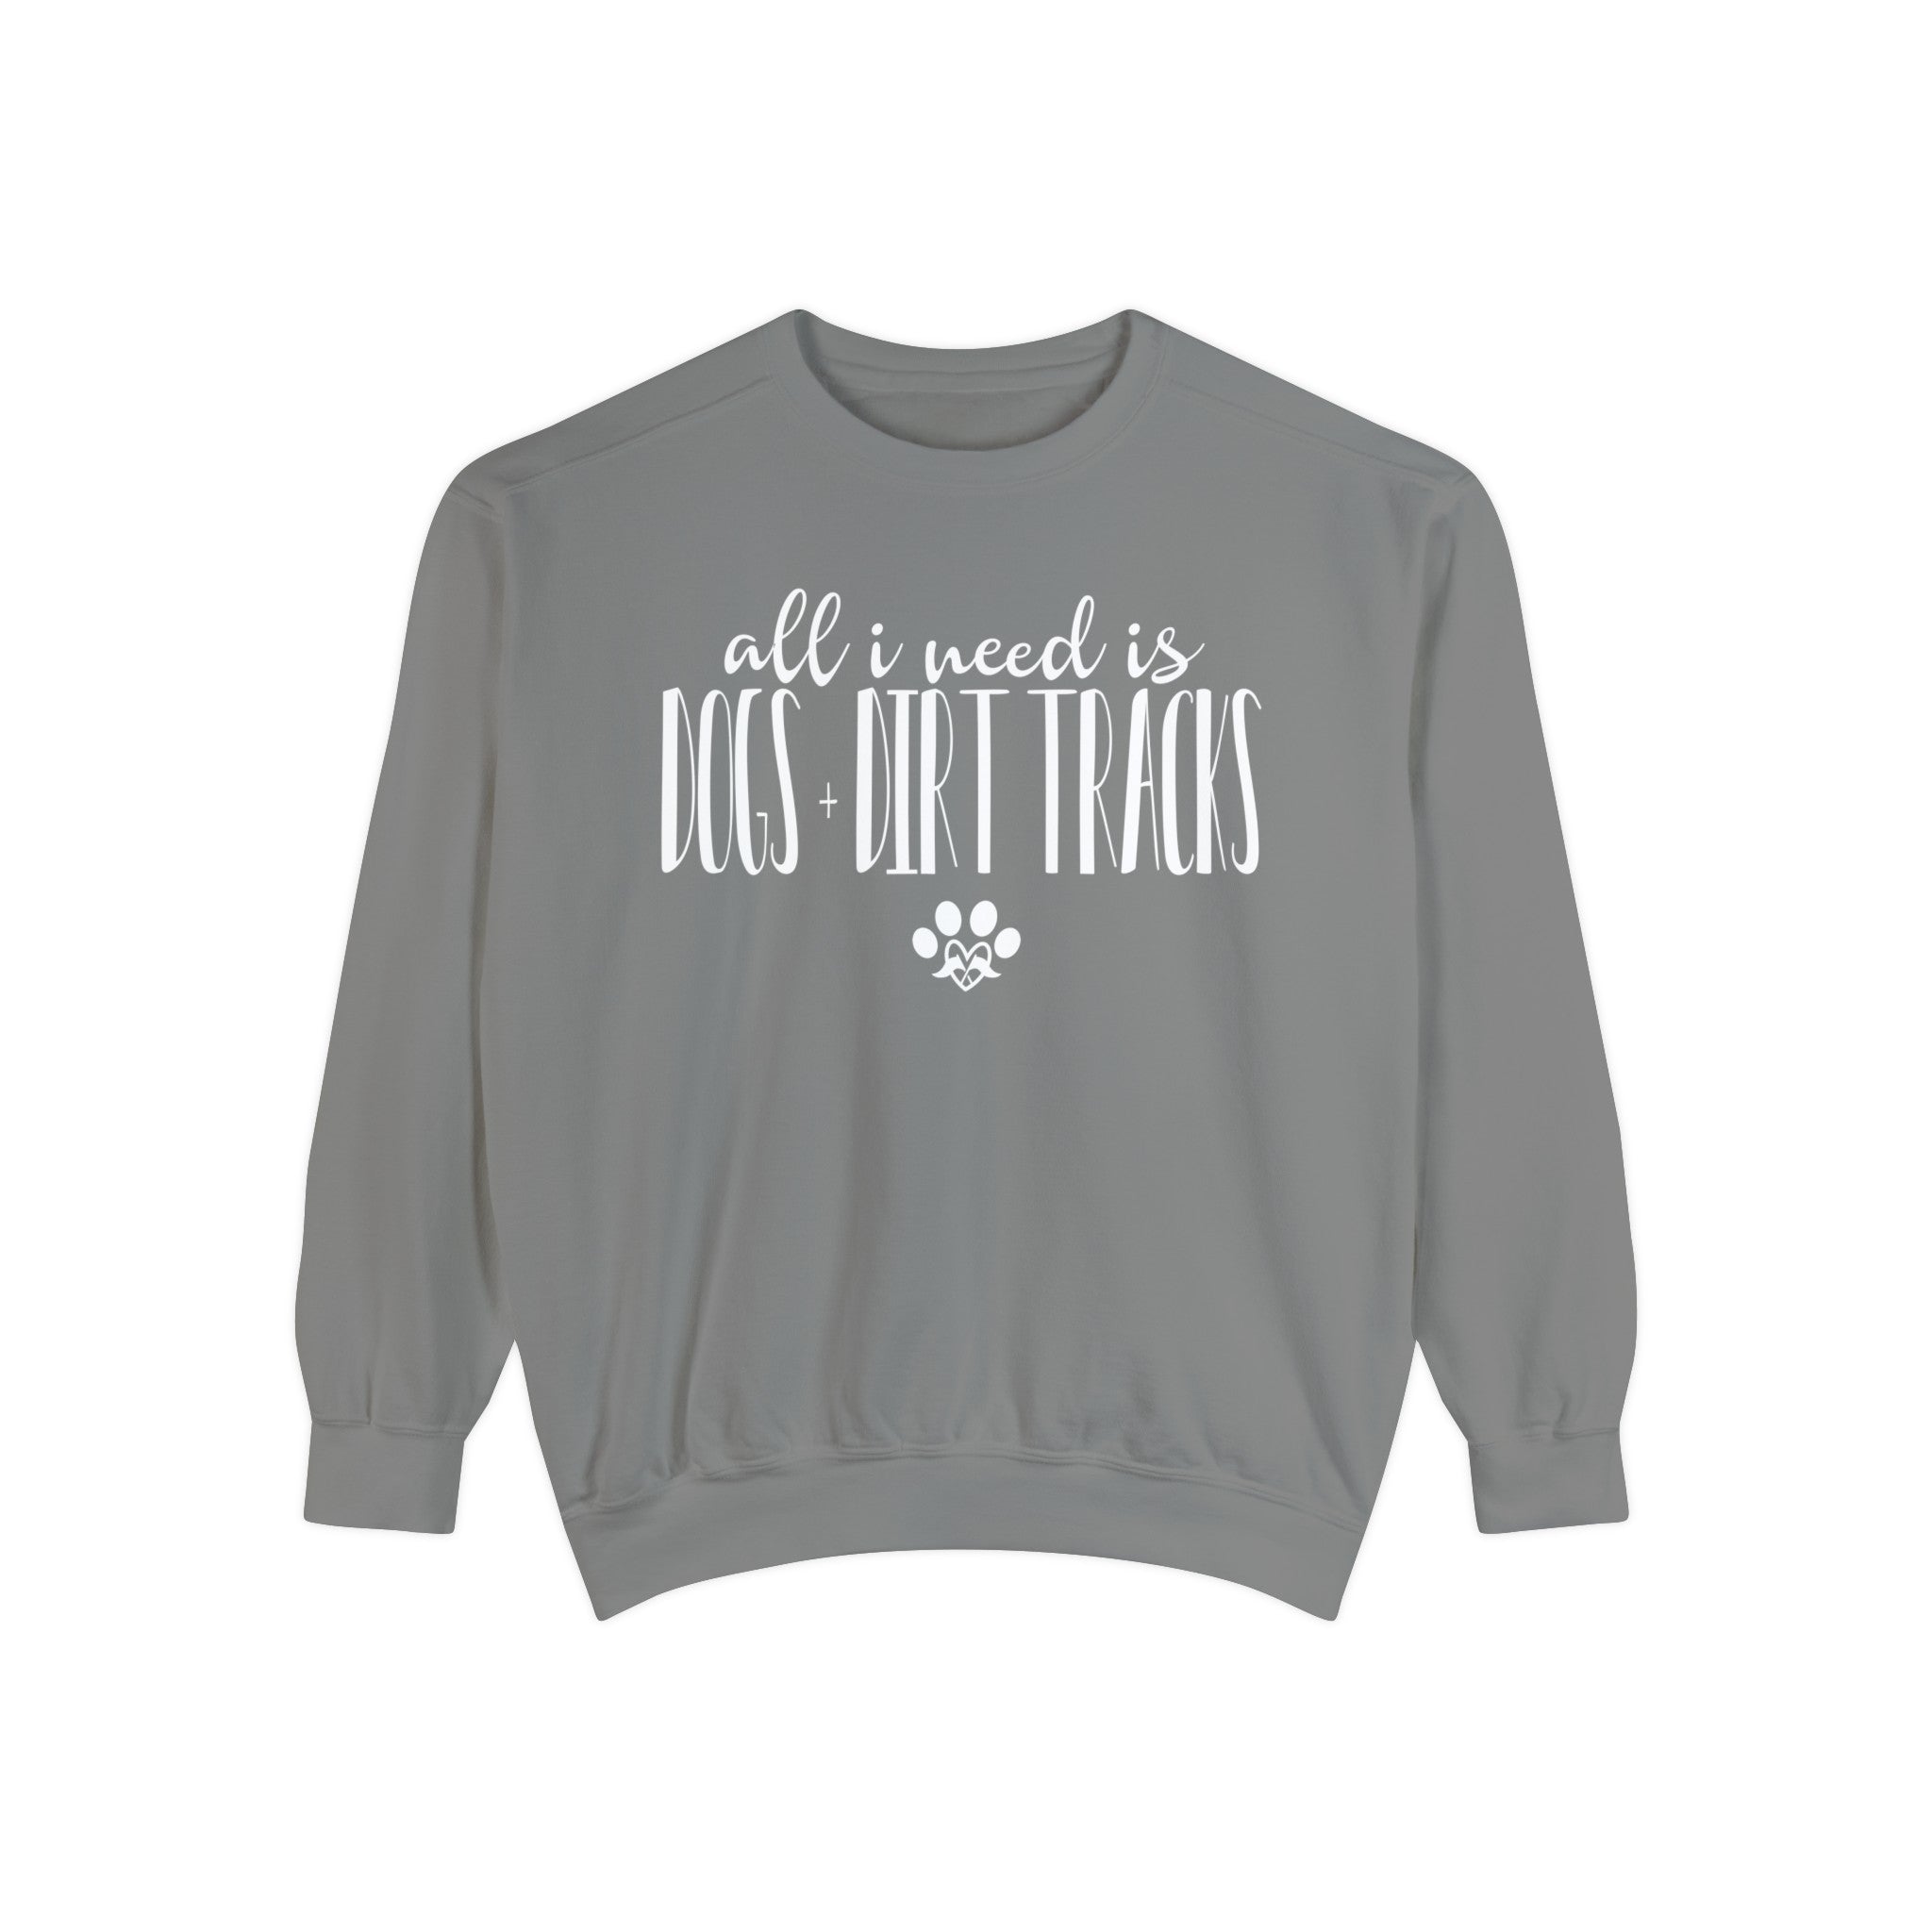 All I Need is Dogs + Dirt Tracks Unisex Garment-Dyed Sweatshirt